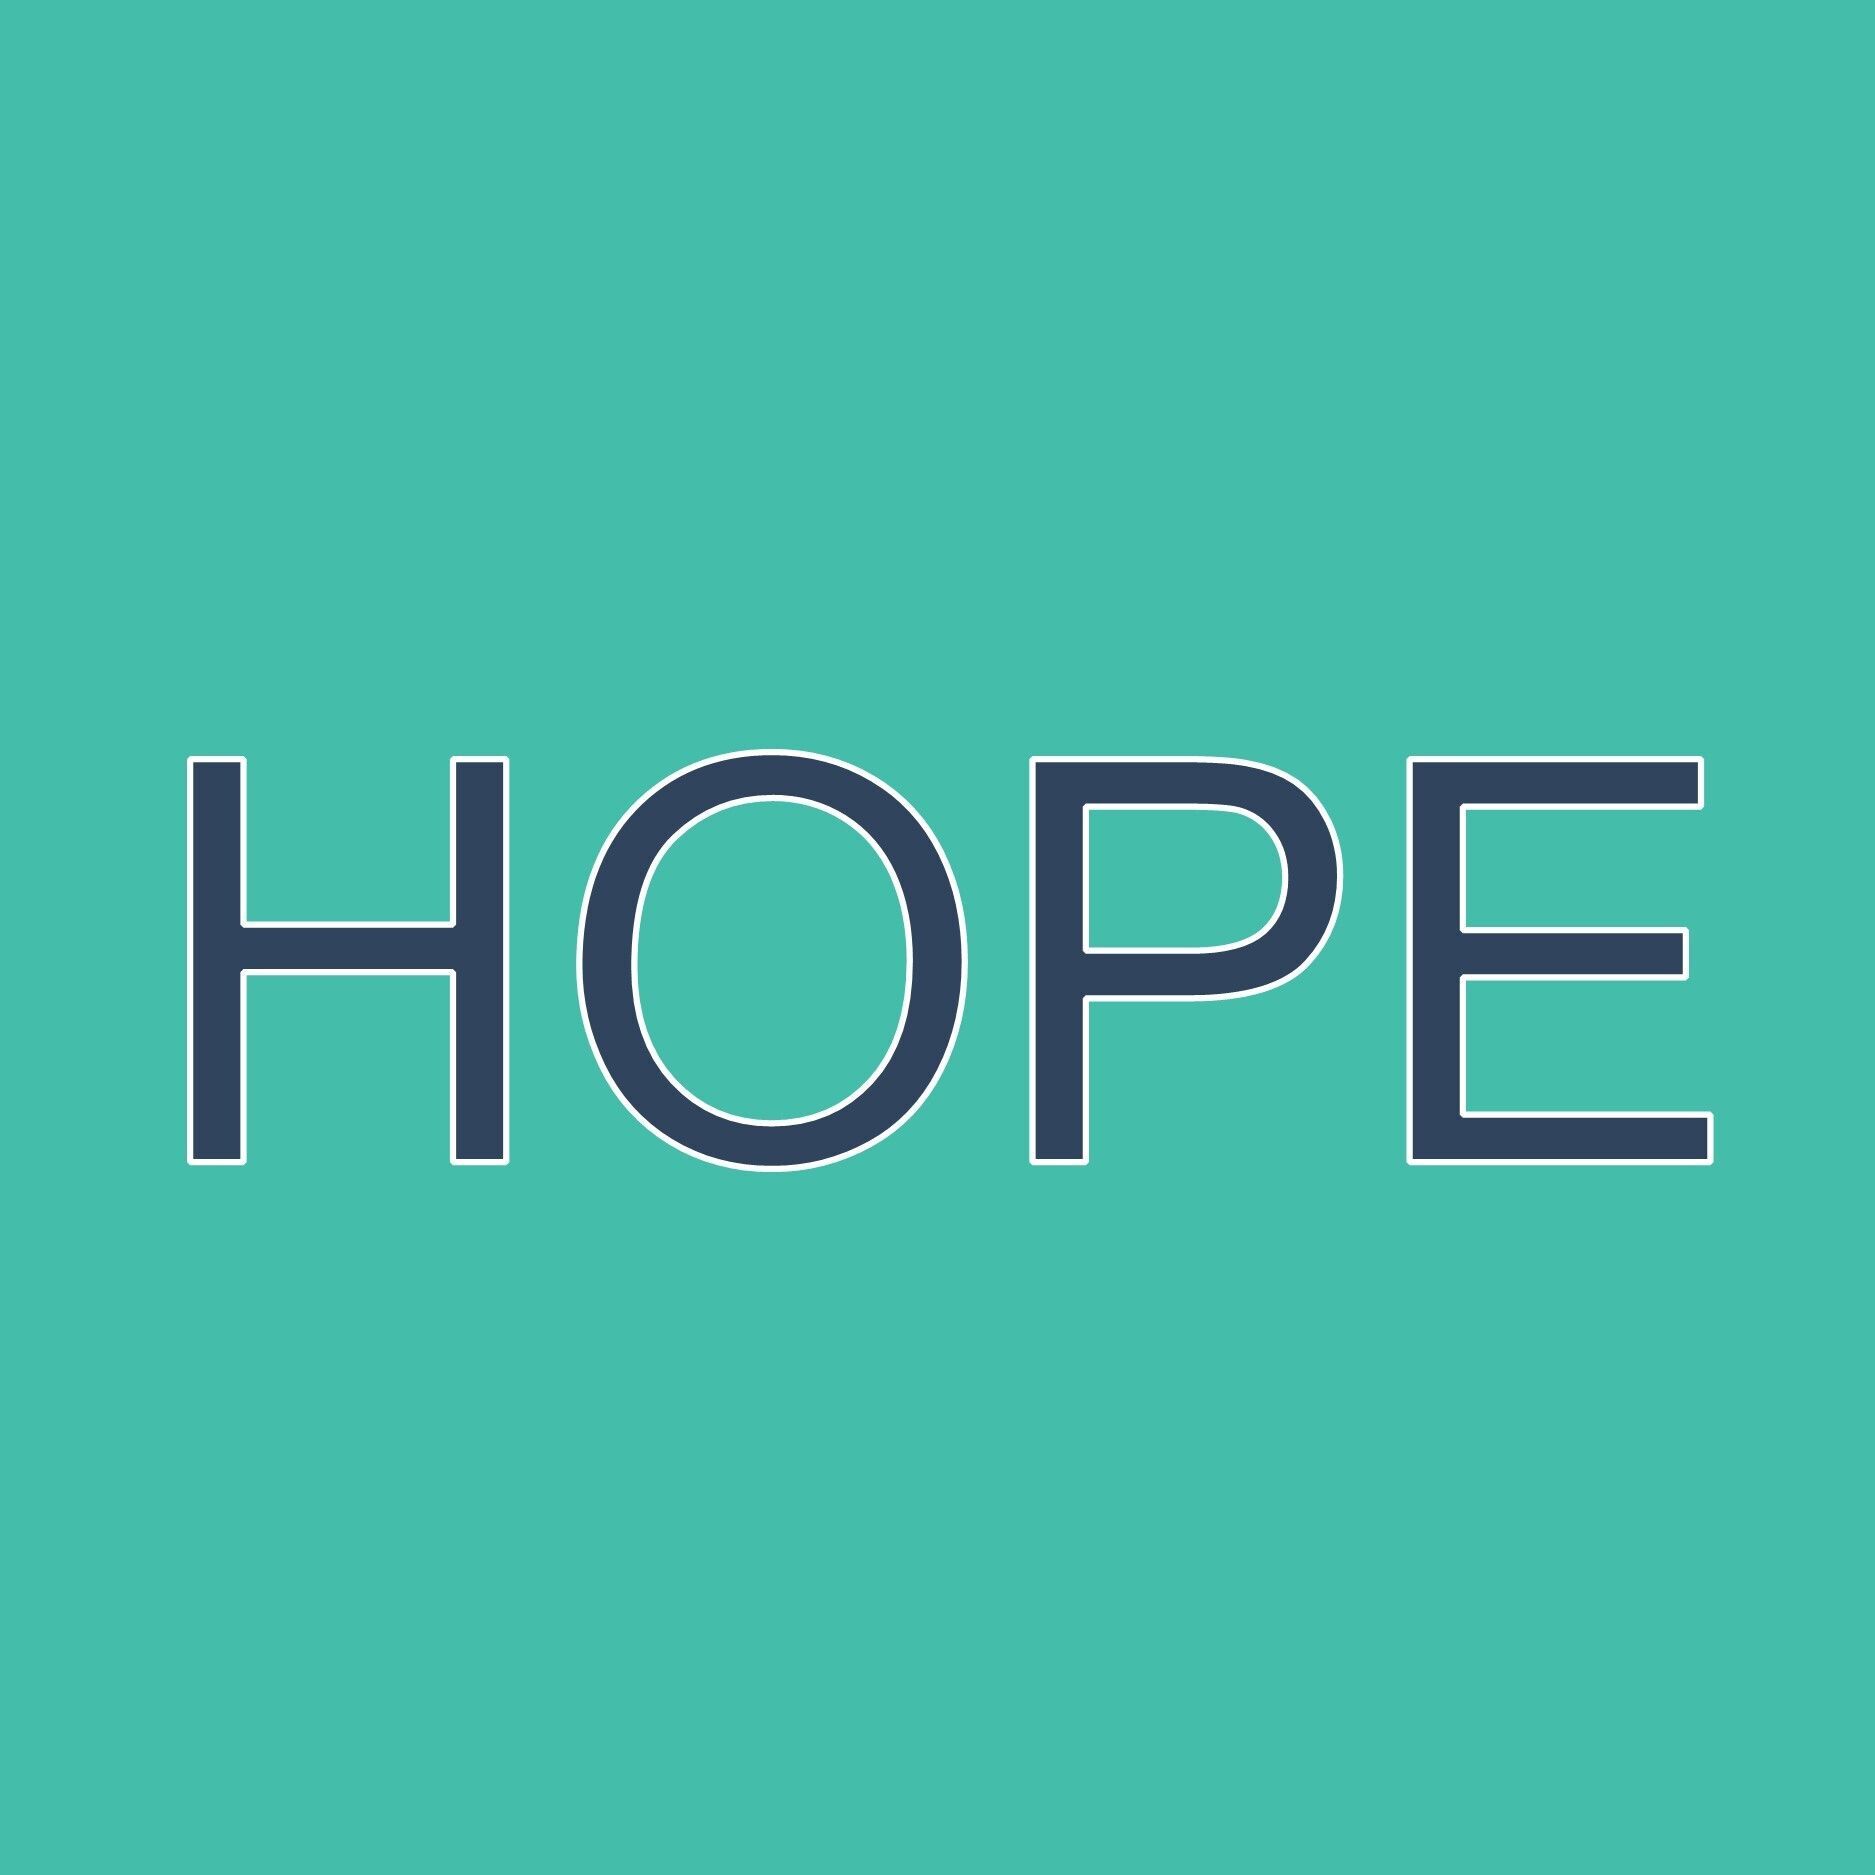 Providing Hope - A Genesis Project Book Club